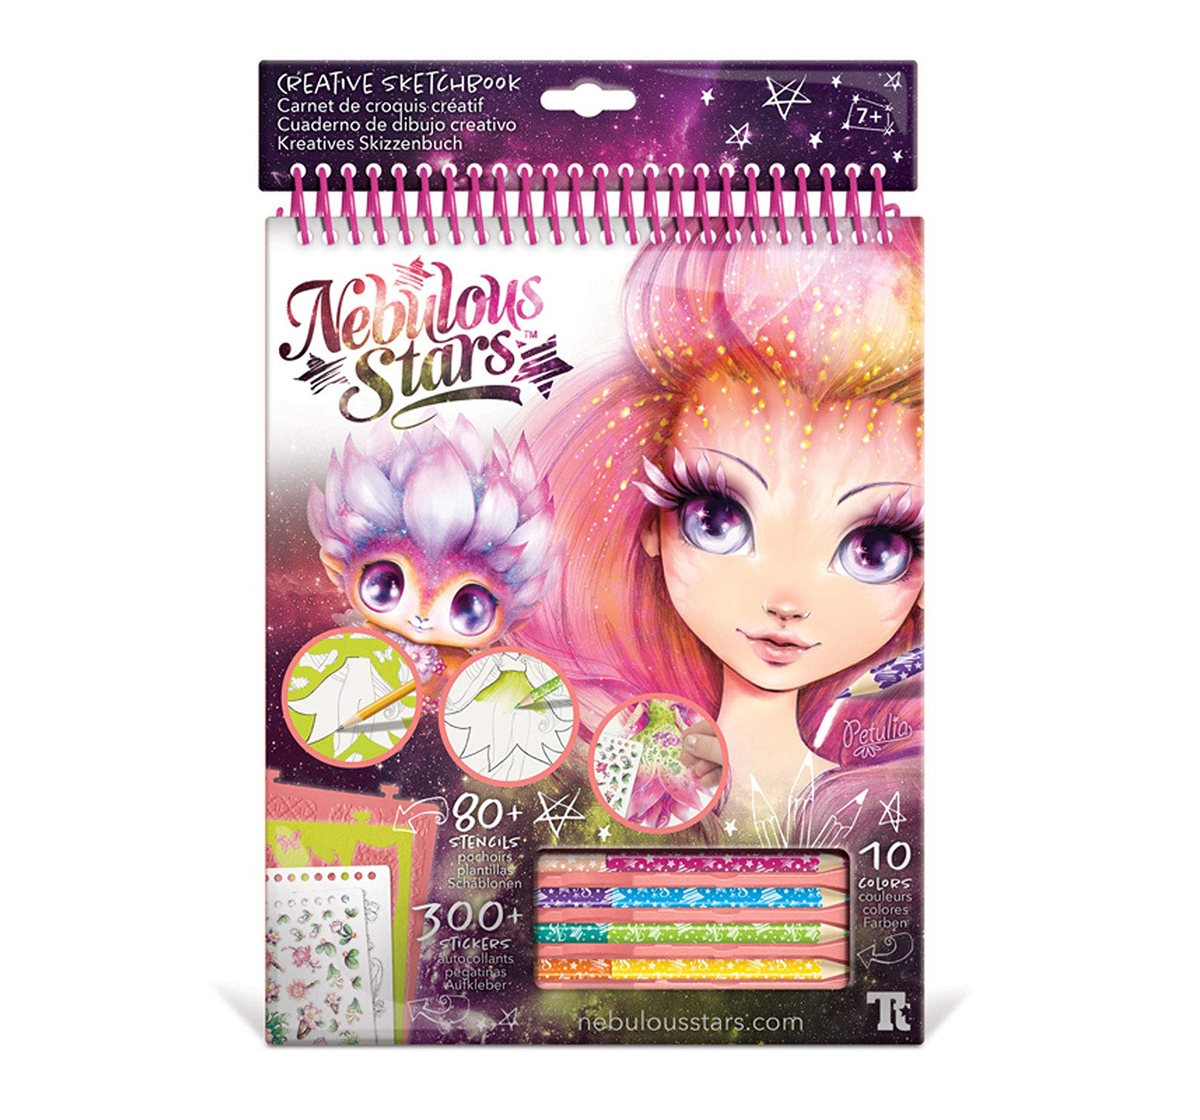 Nebulous Star | Nebulous Star - Creative Sketchbook - Petulia DIY Art & Craft Kits for Girls age 7Y+ 0